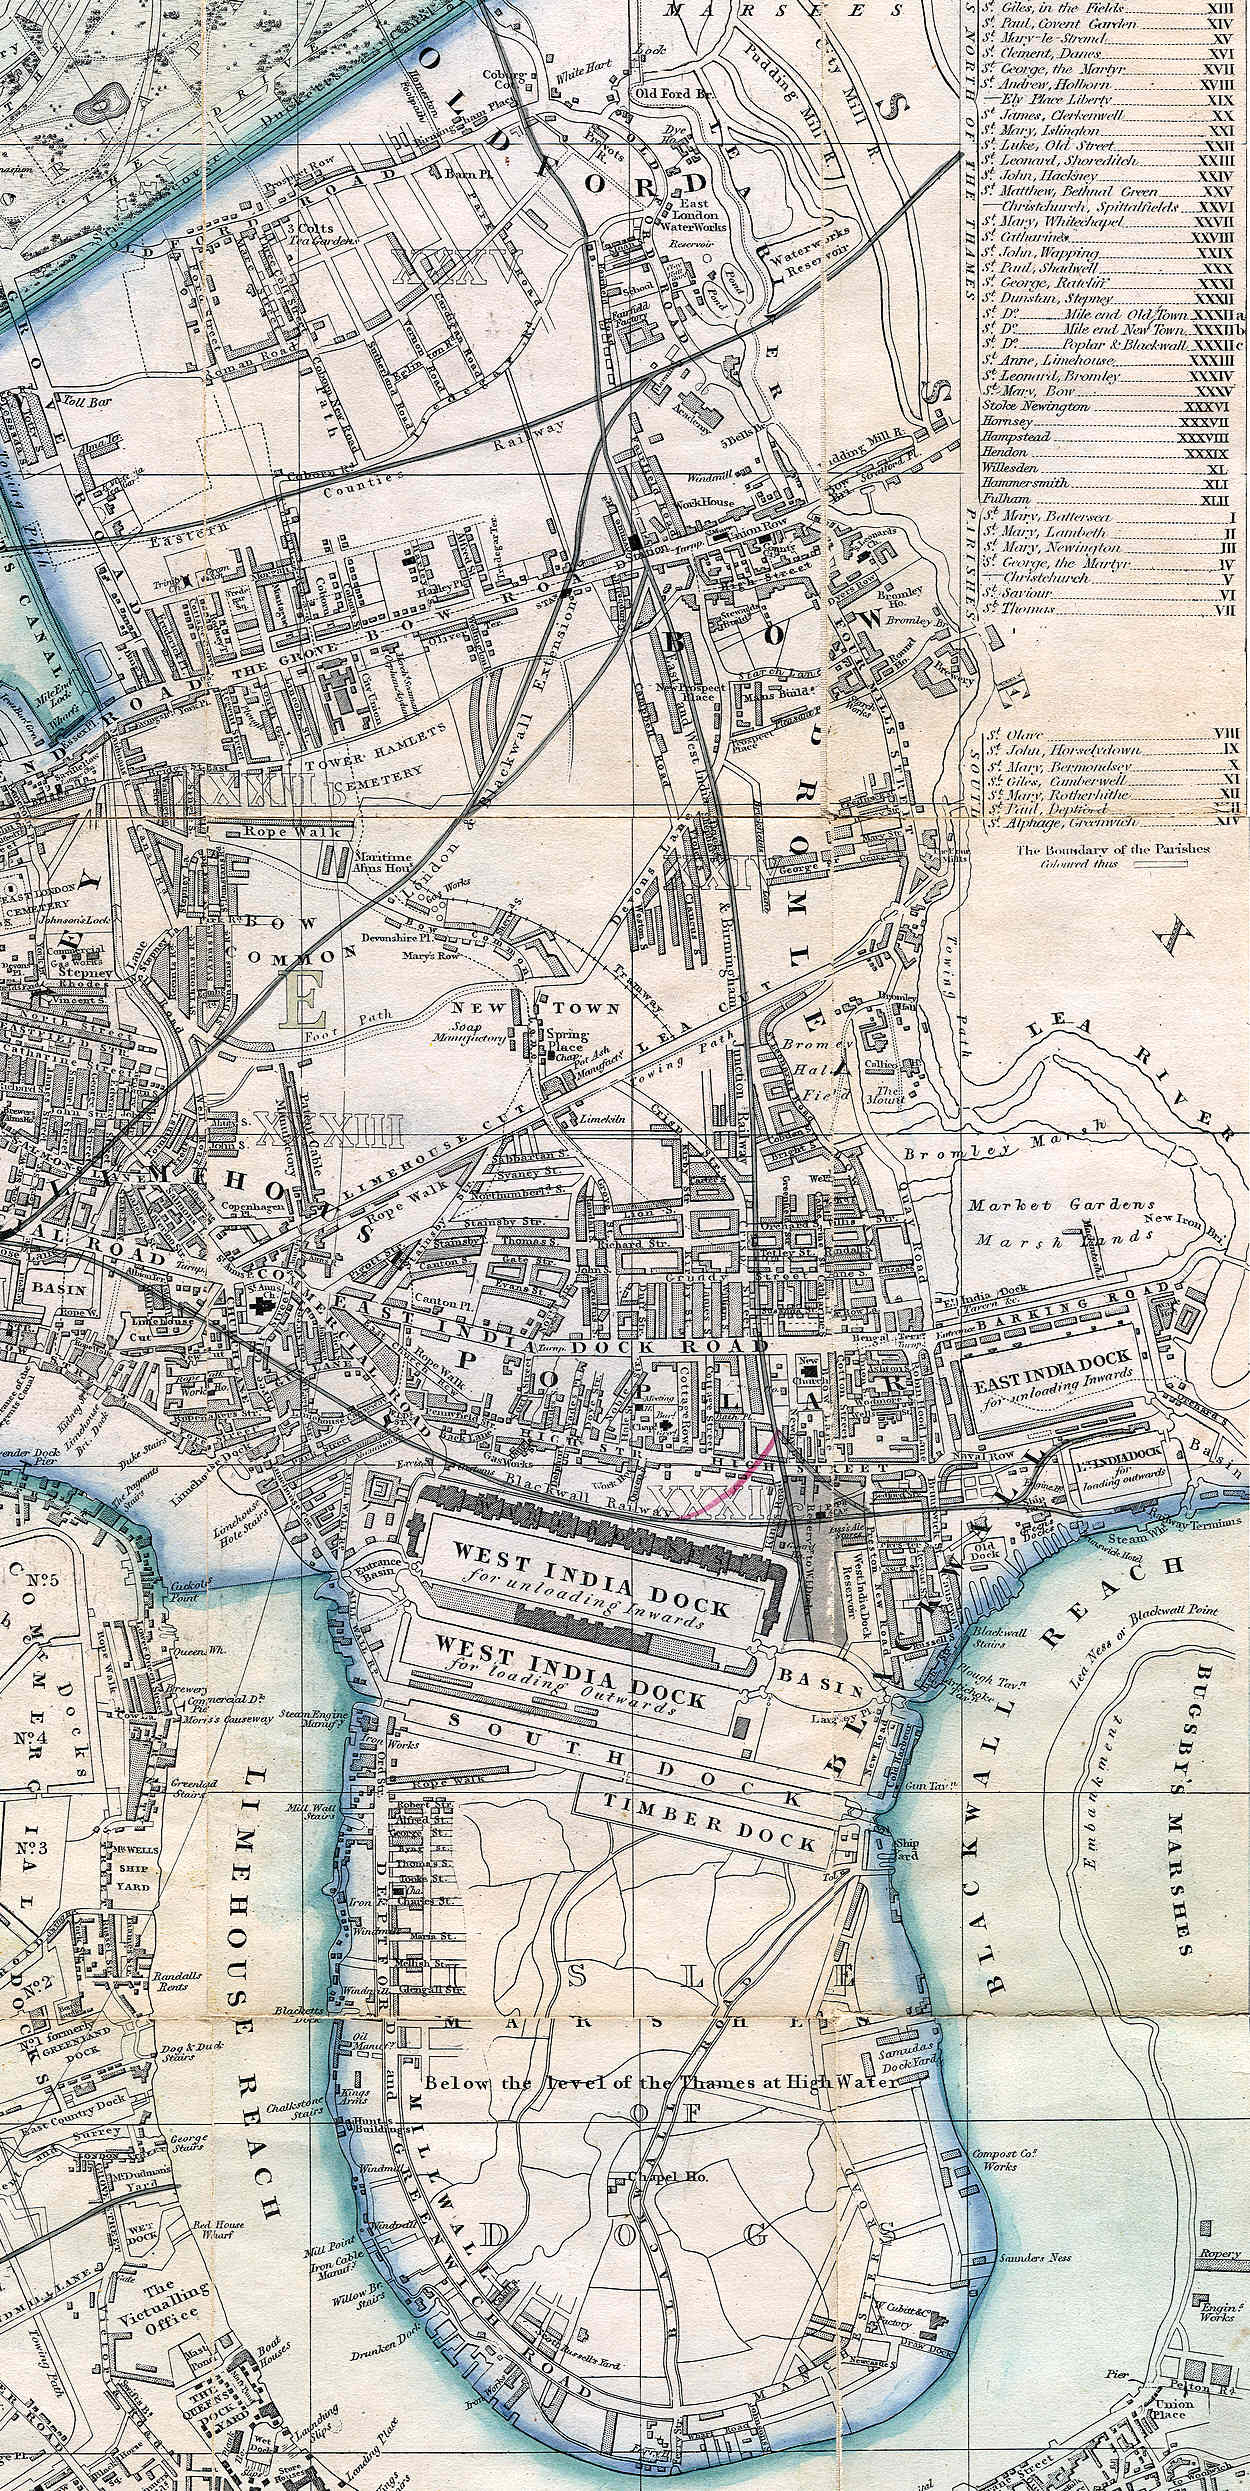 1861 - Cross, "New Plan of London"